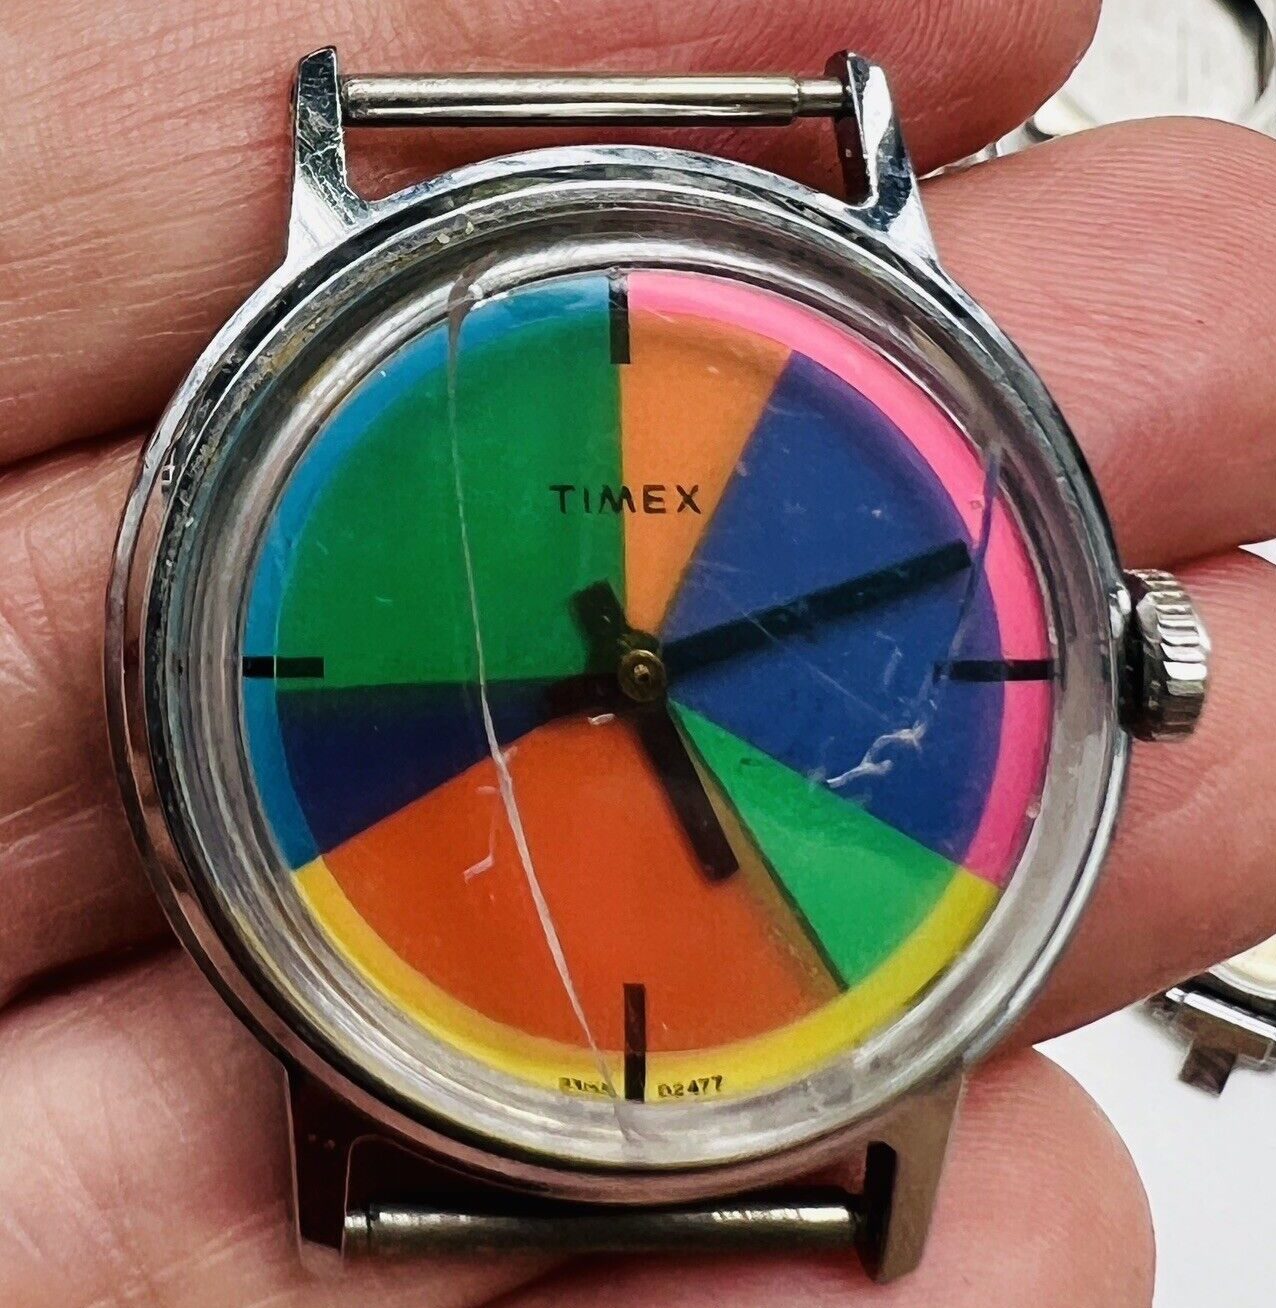 Timex Color Flicks 23155 02477 [1977] Sprite